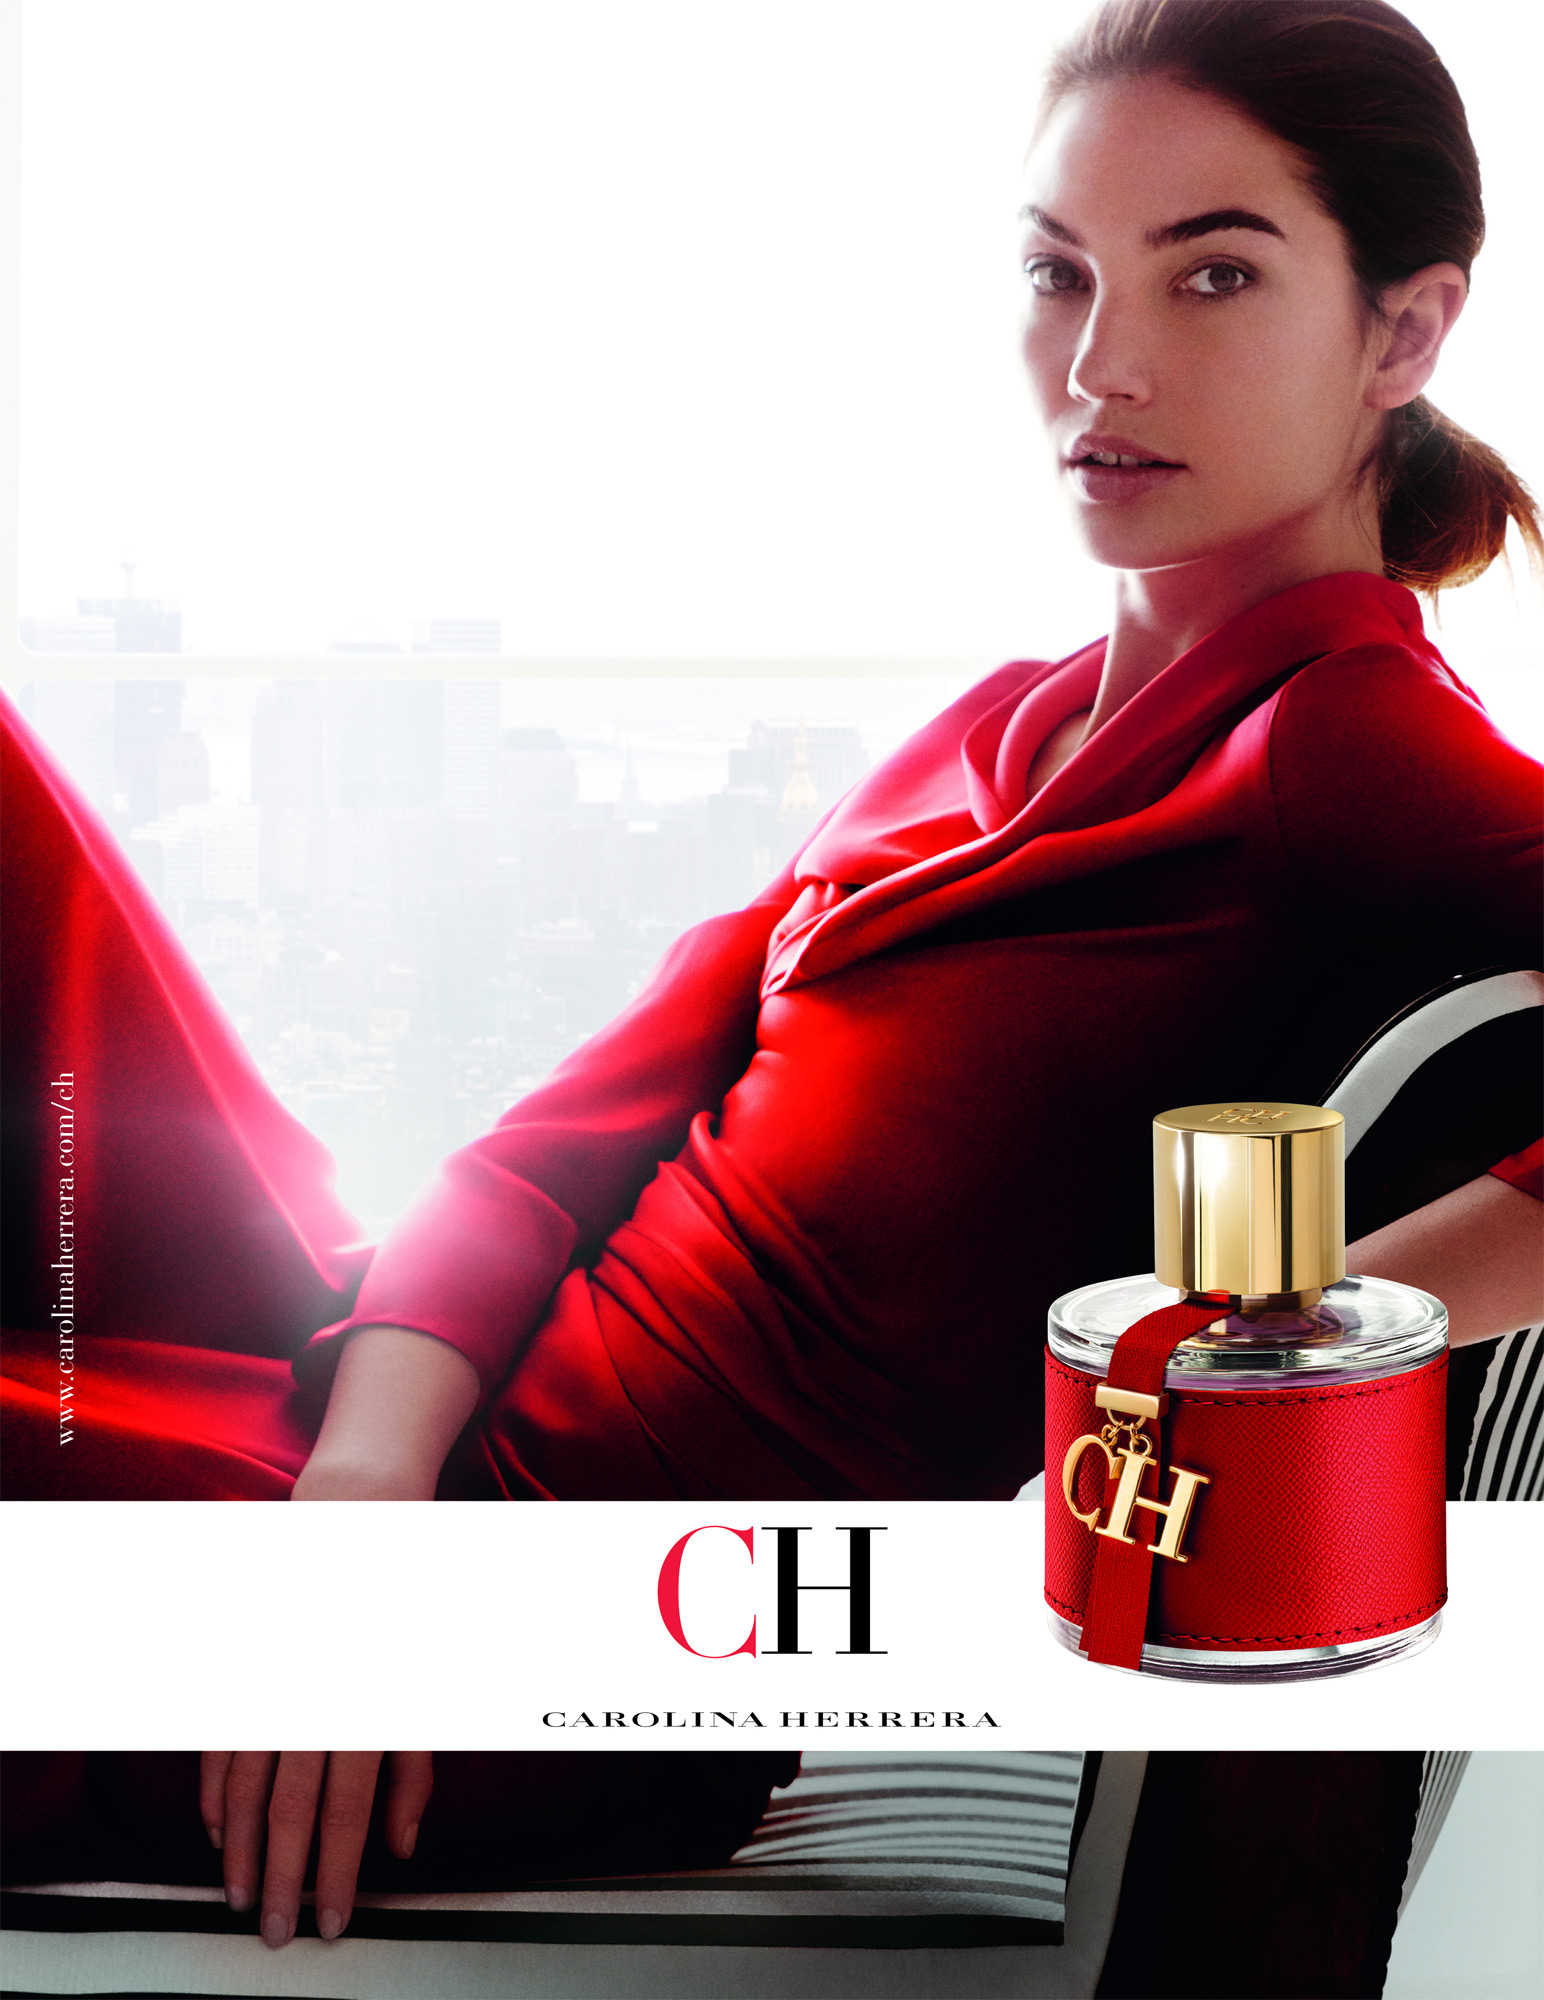 Ch 2015 Carolina Herrera Perfume A New Fragrance For Women 2015